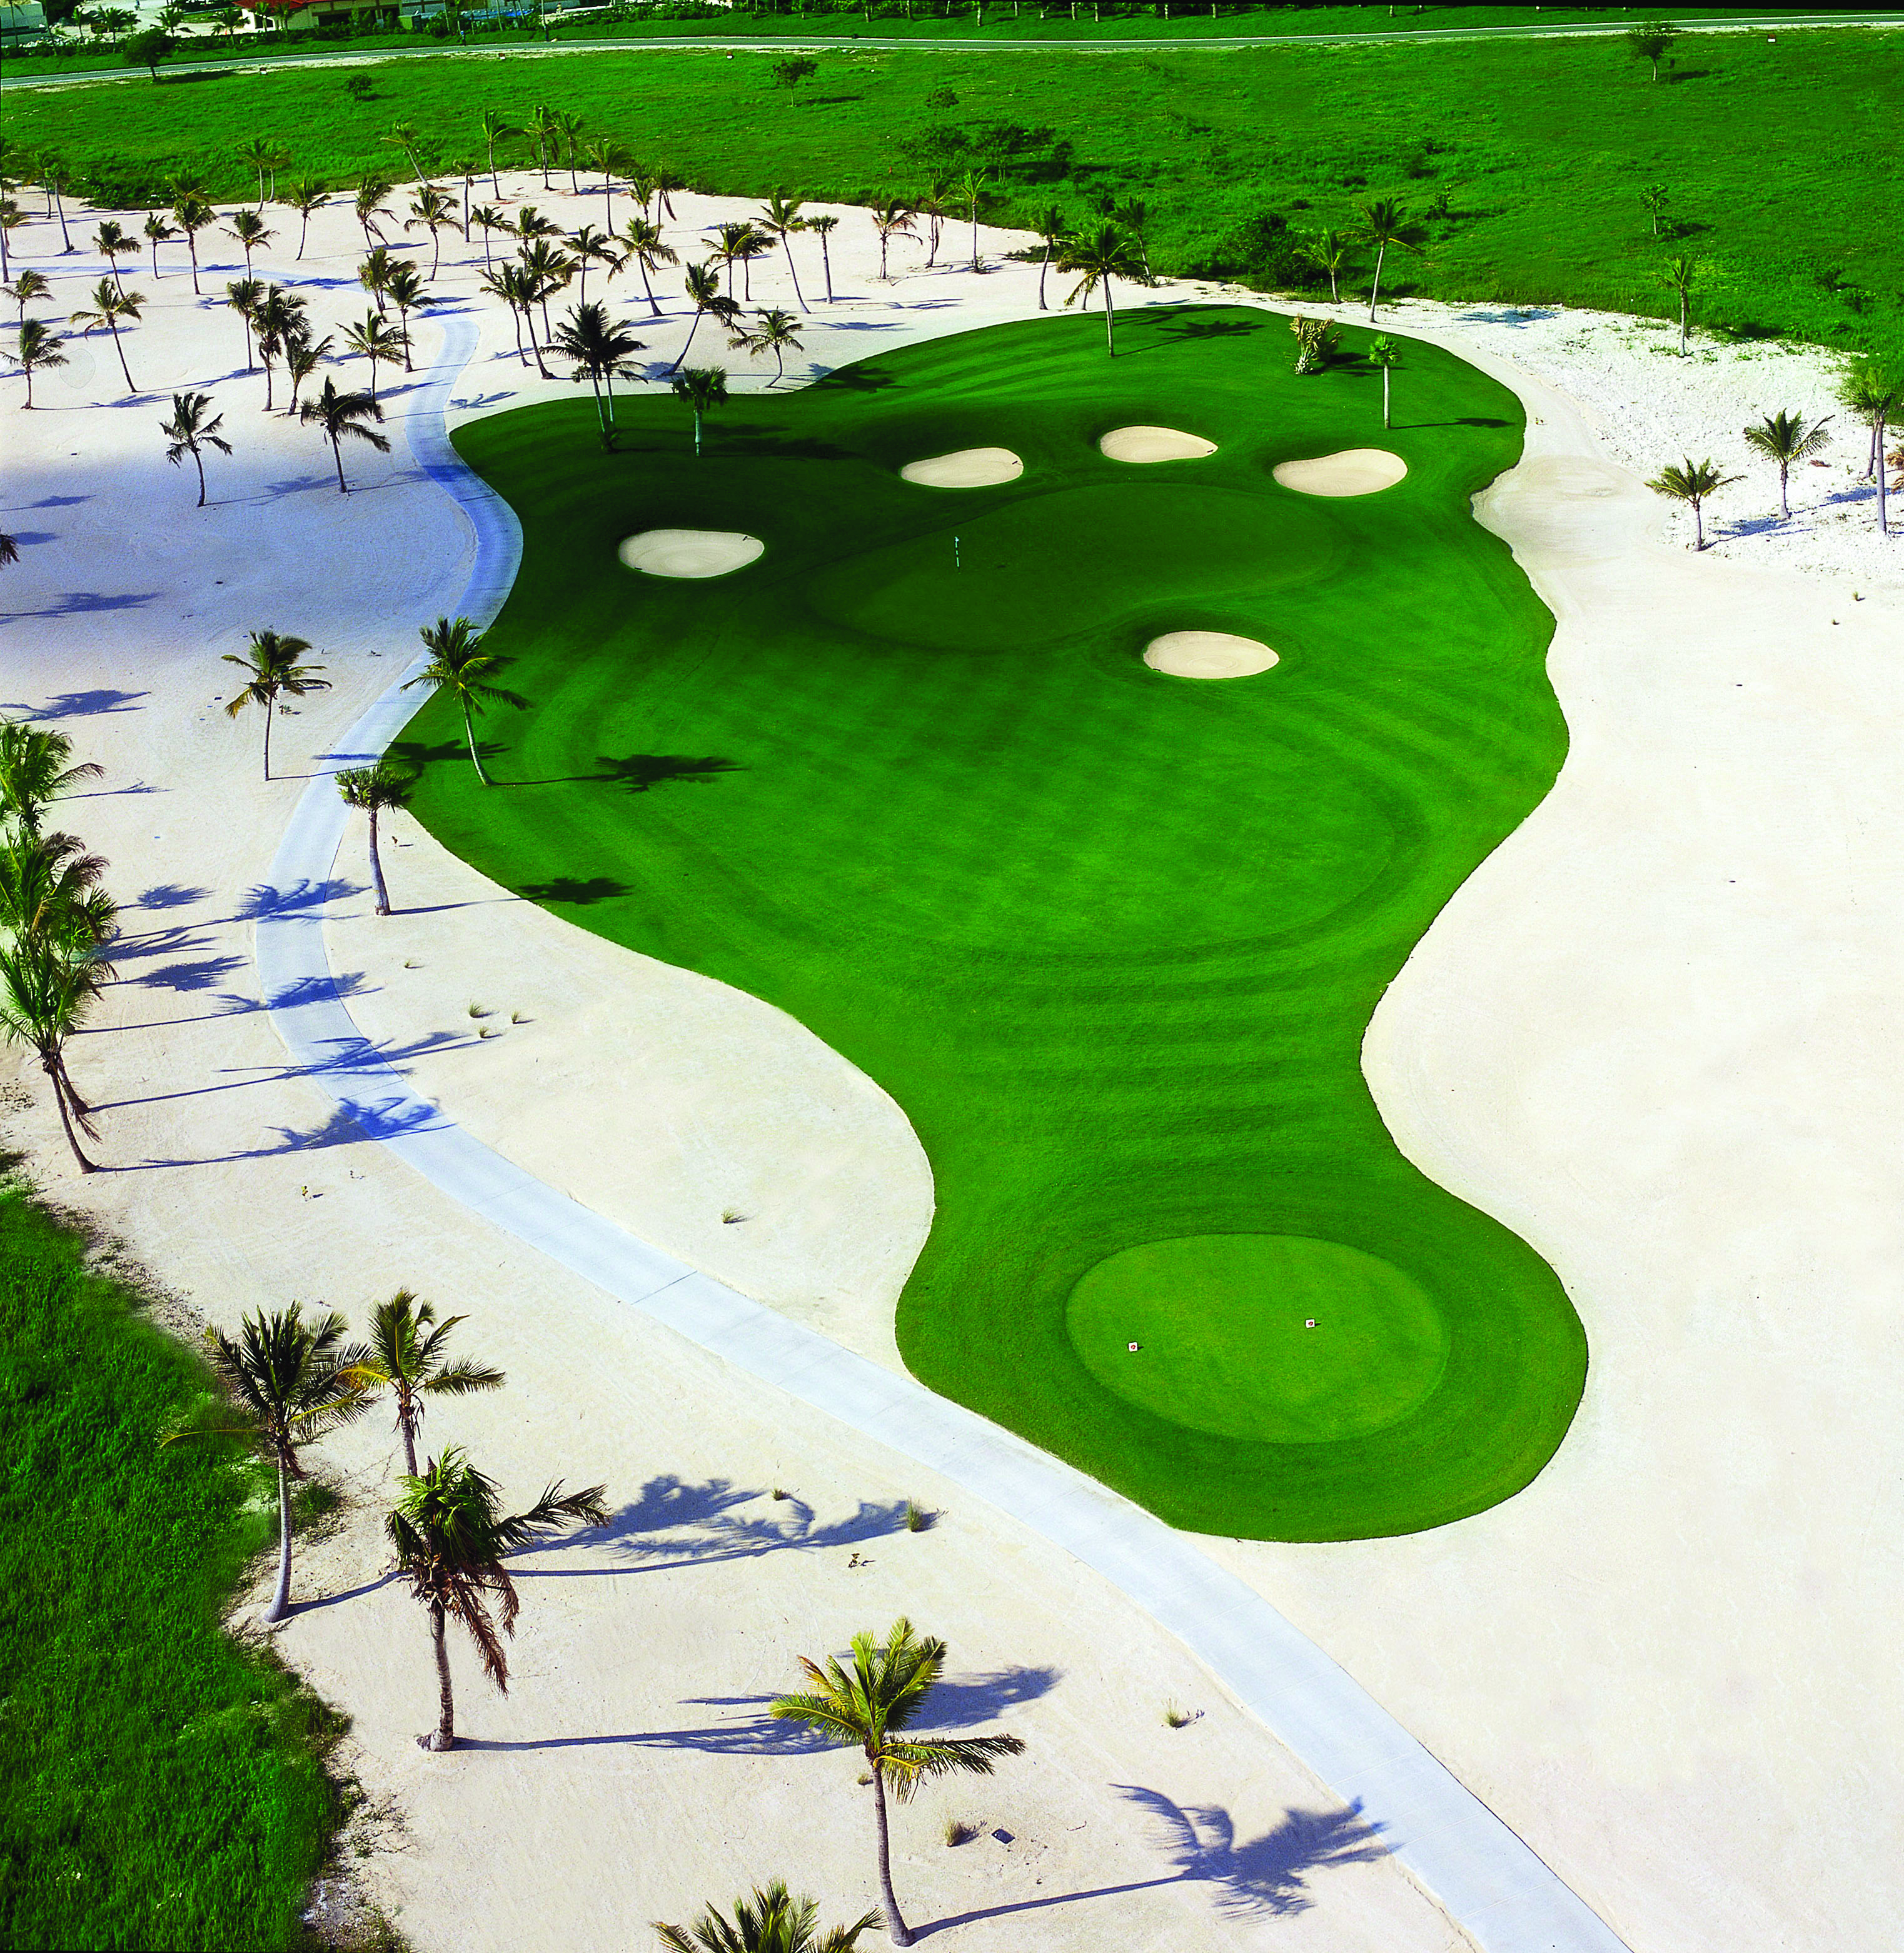 Punta Cana Golf Course